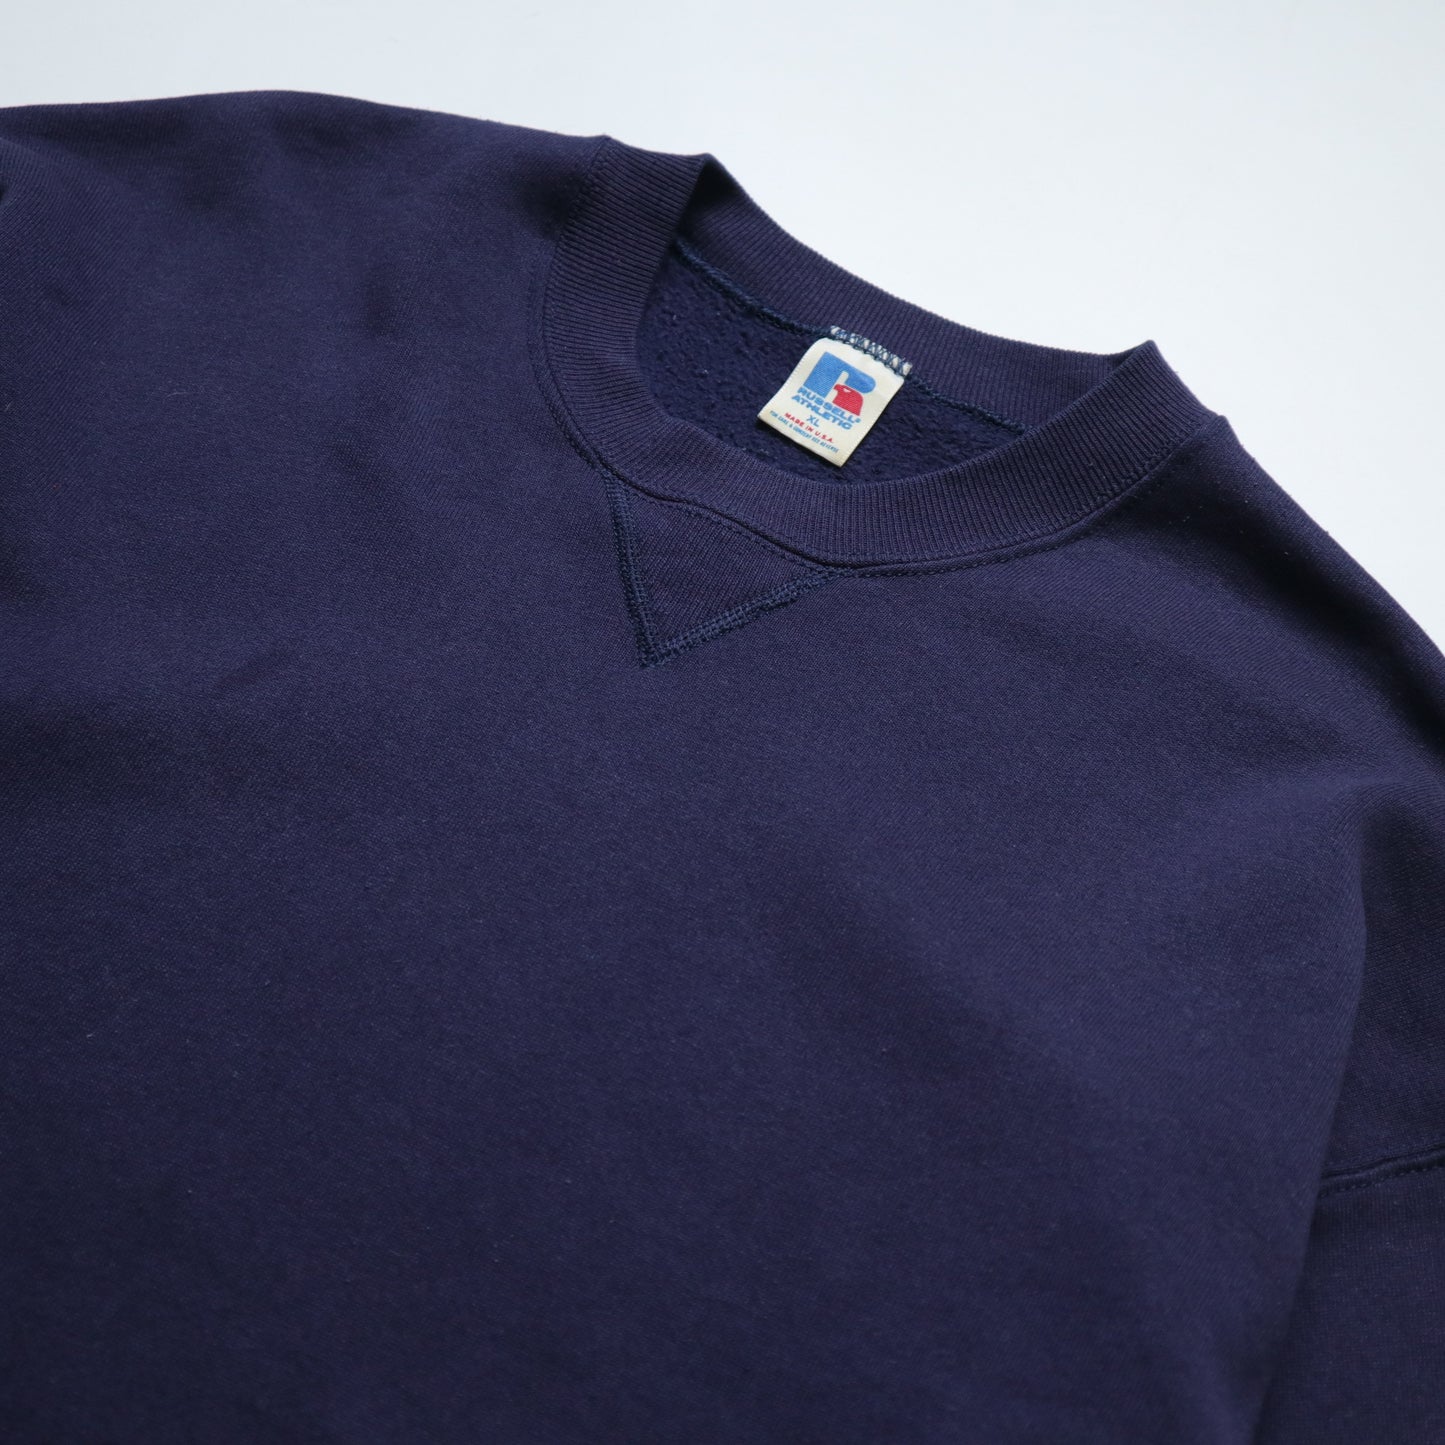 80s RUSSELL American-made blue and purple plain sweatshirt